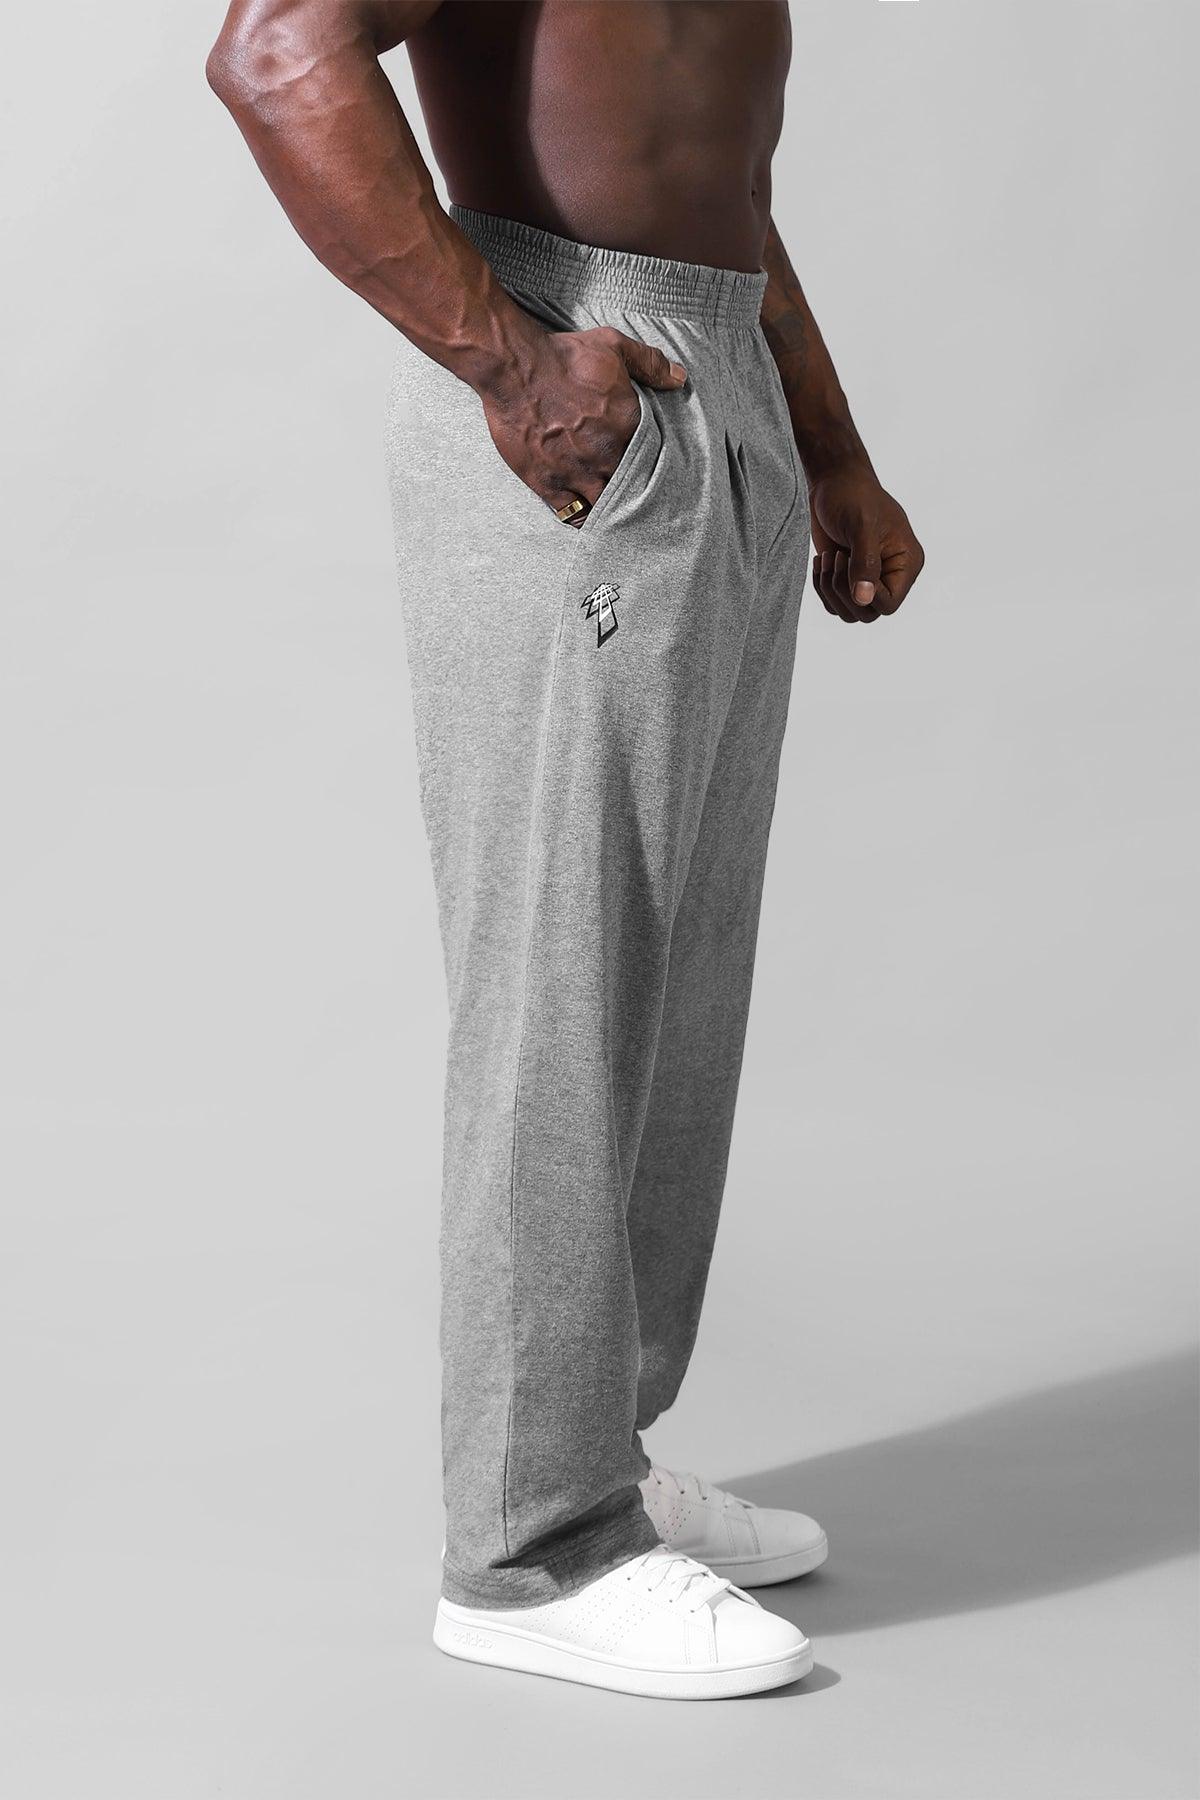 Retro Oversized Bodybuilding Pants - Glacier Gray